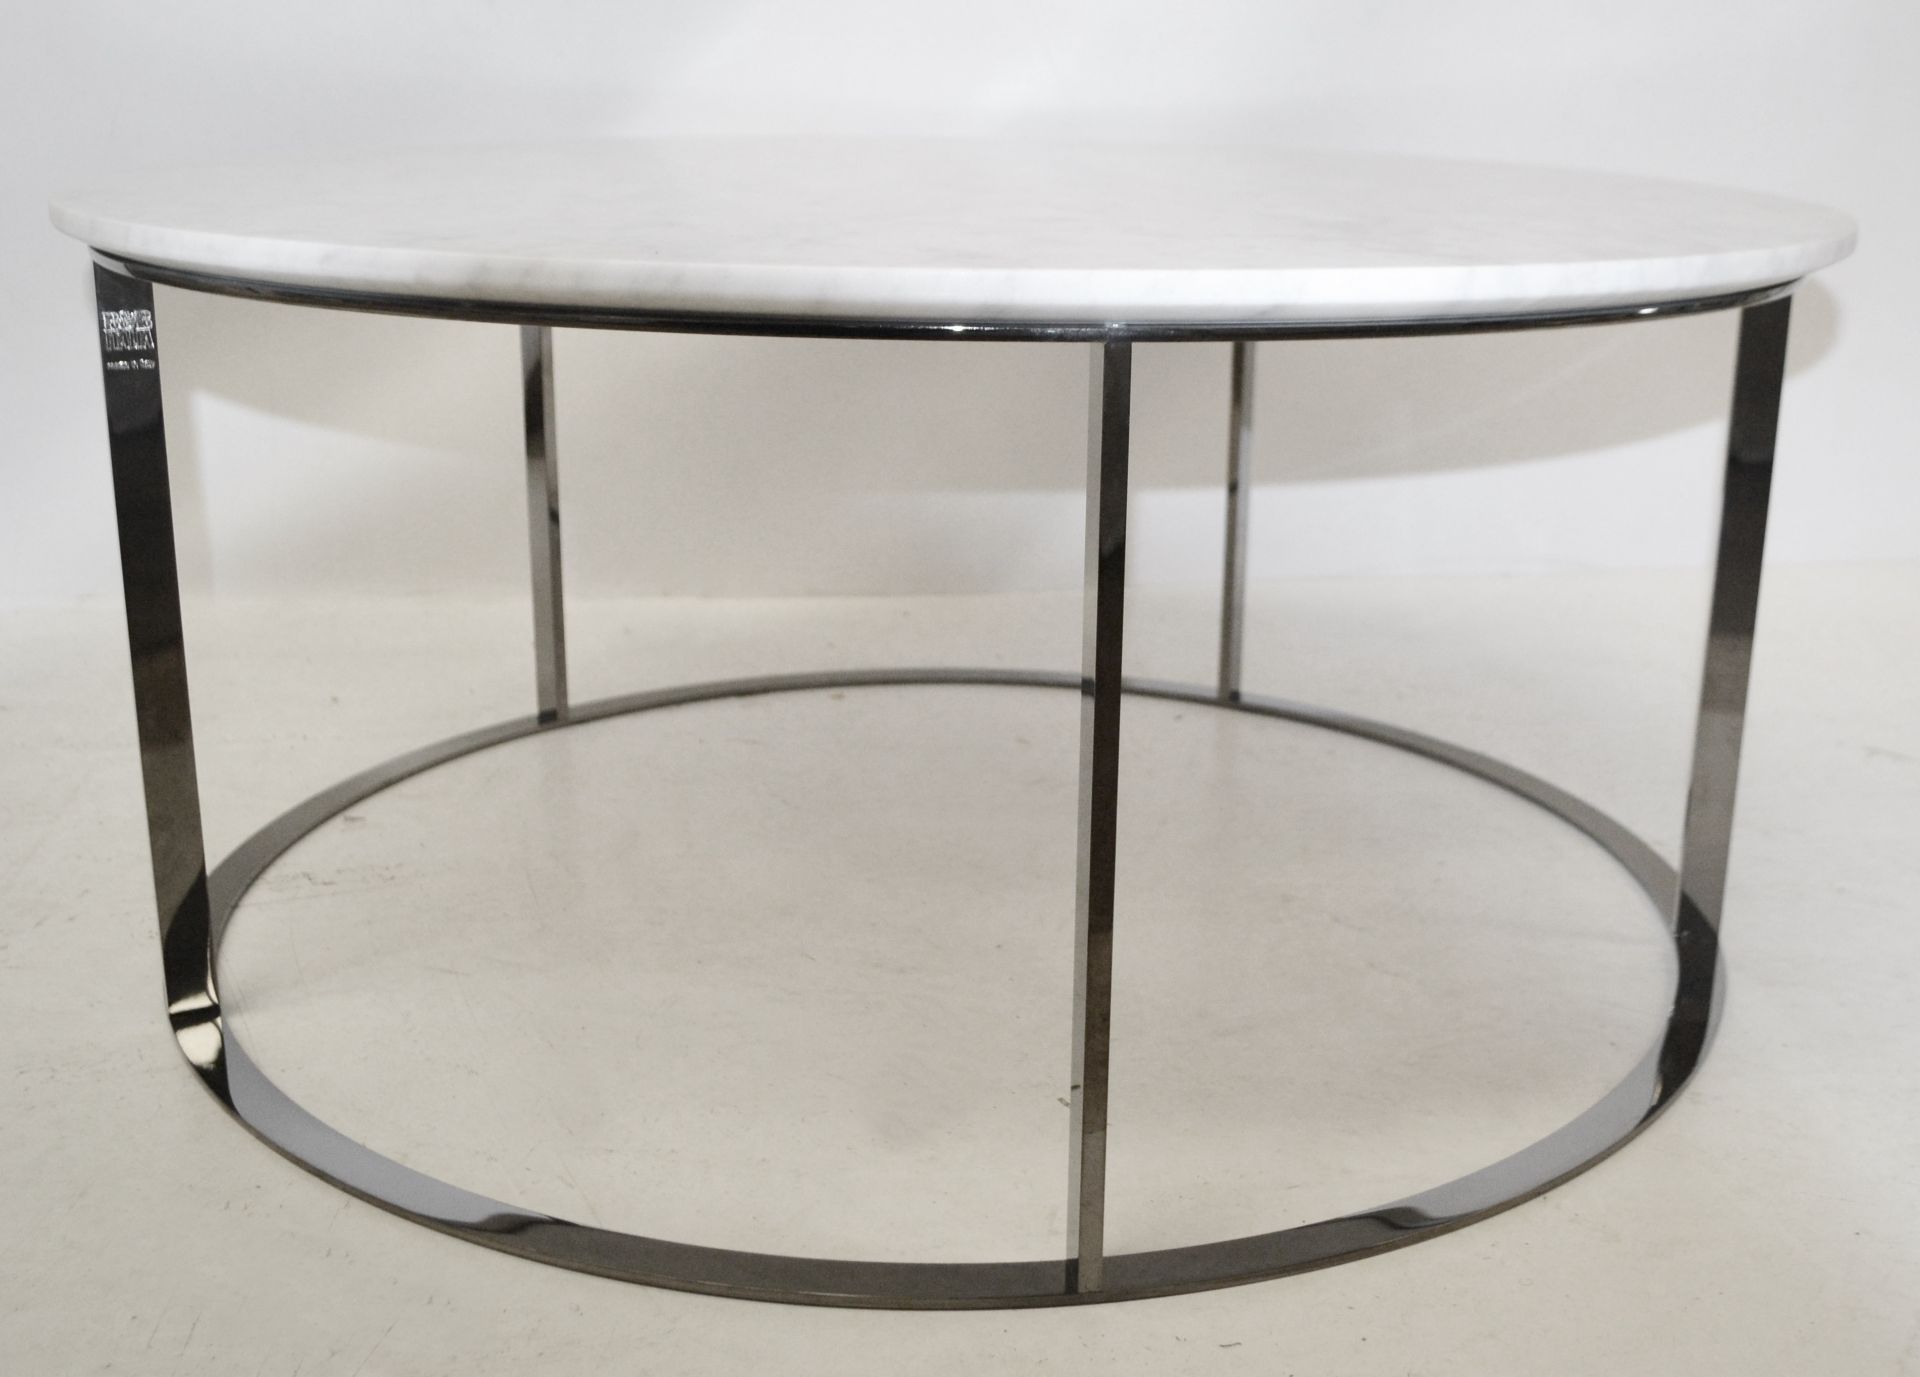 1 x B&B Italia 'MERA' White Marble Topped Designer Table (MTR90) - Designed By Antonio Citterio - Image 7 of 14